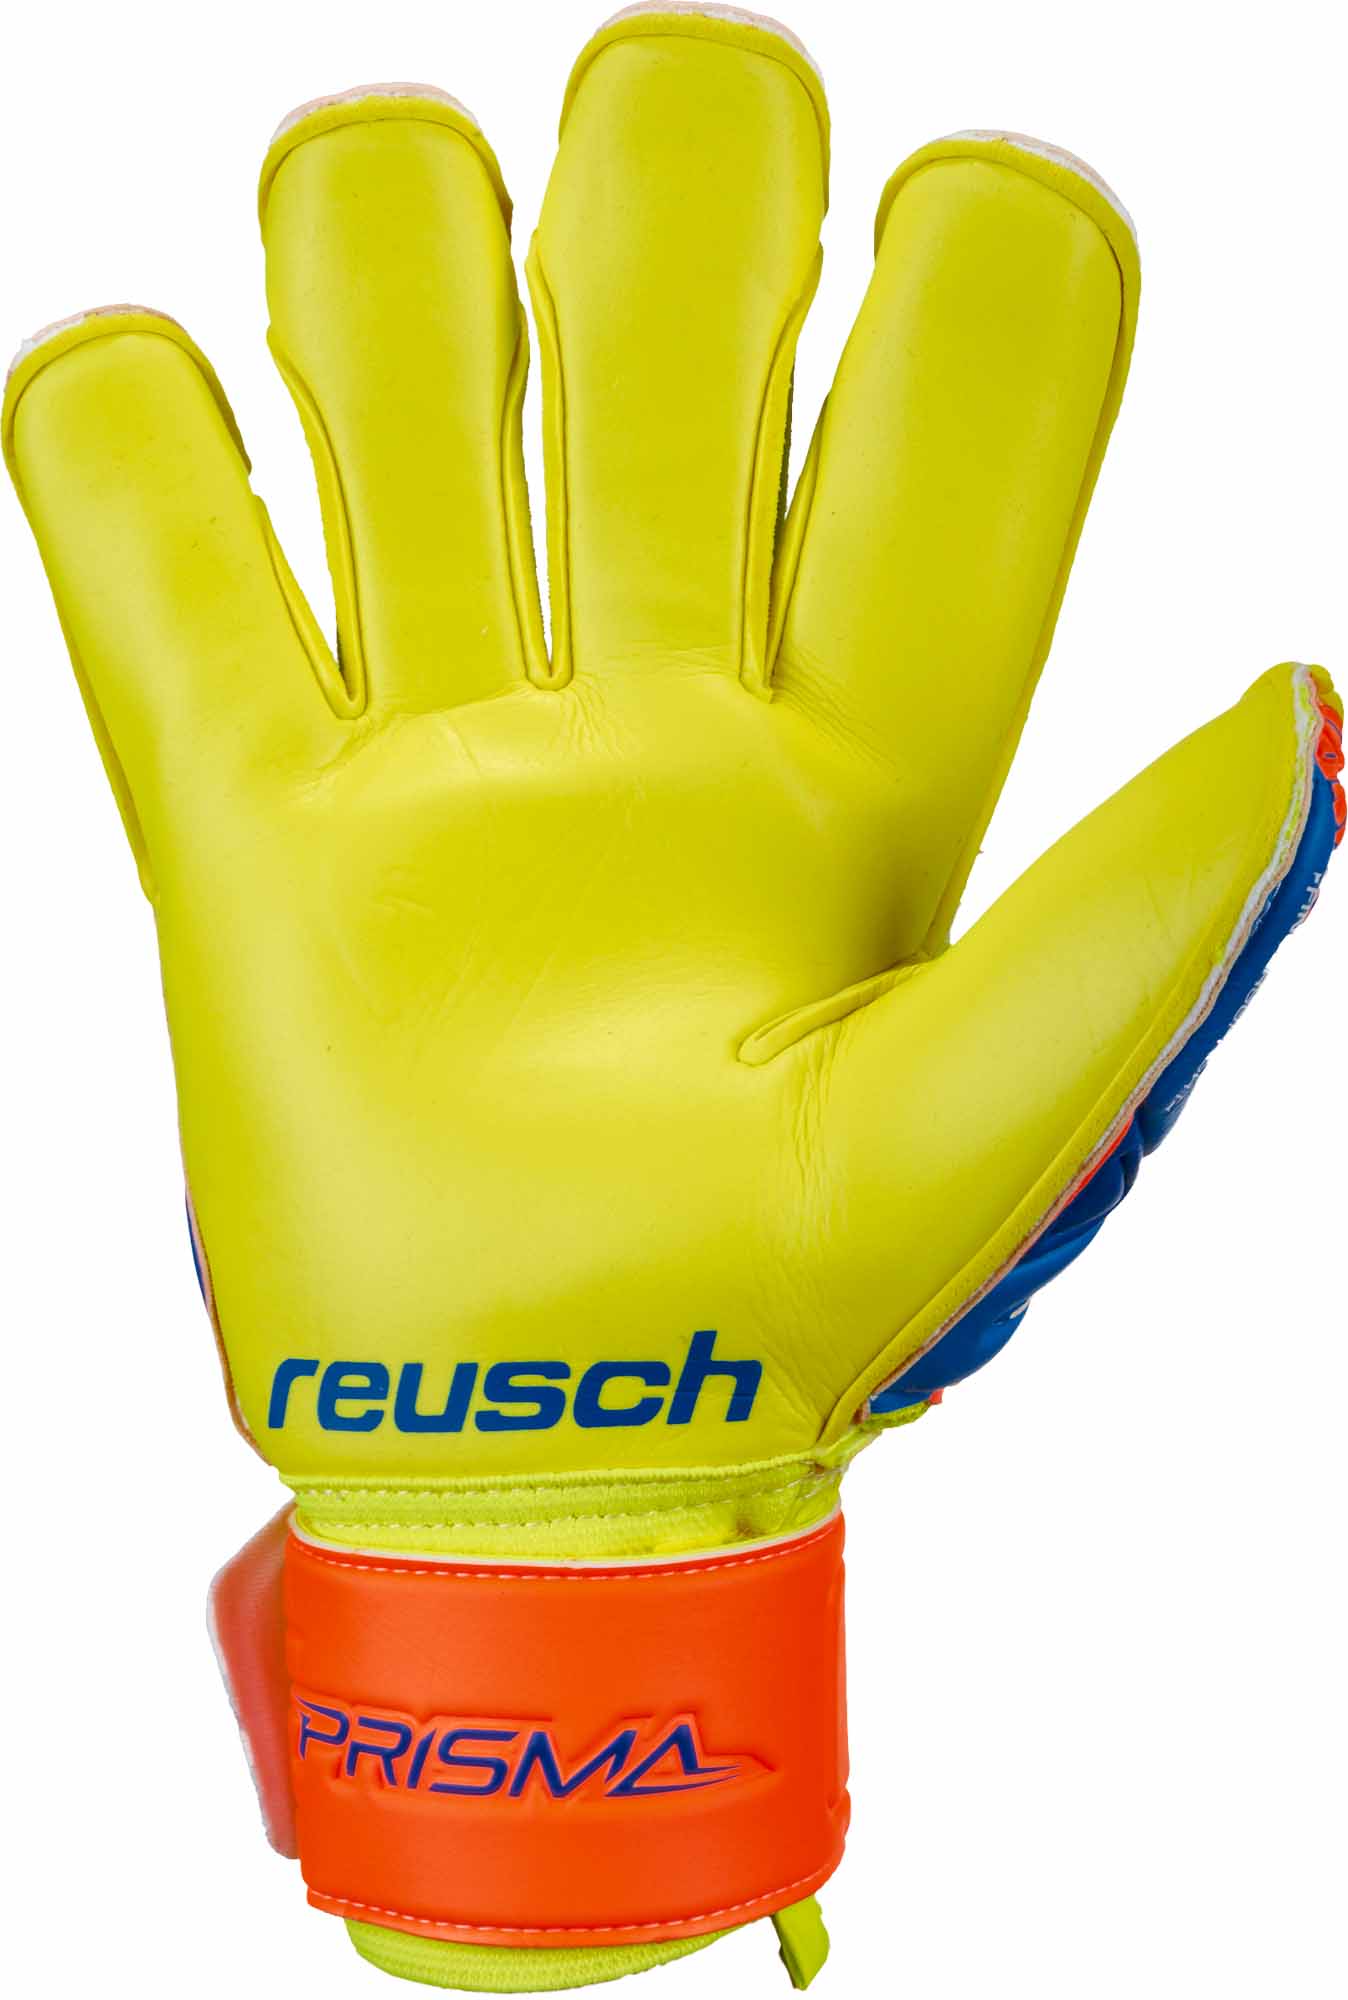 SCC Reusch Attrakt S1 Evolution Finger Support Goalkeeper Gloves